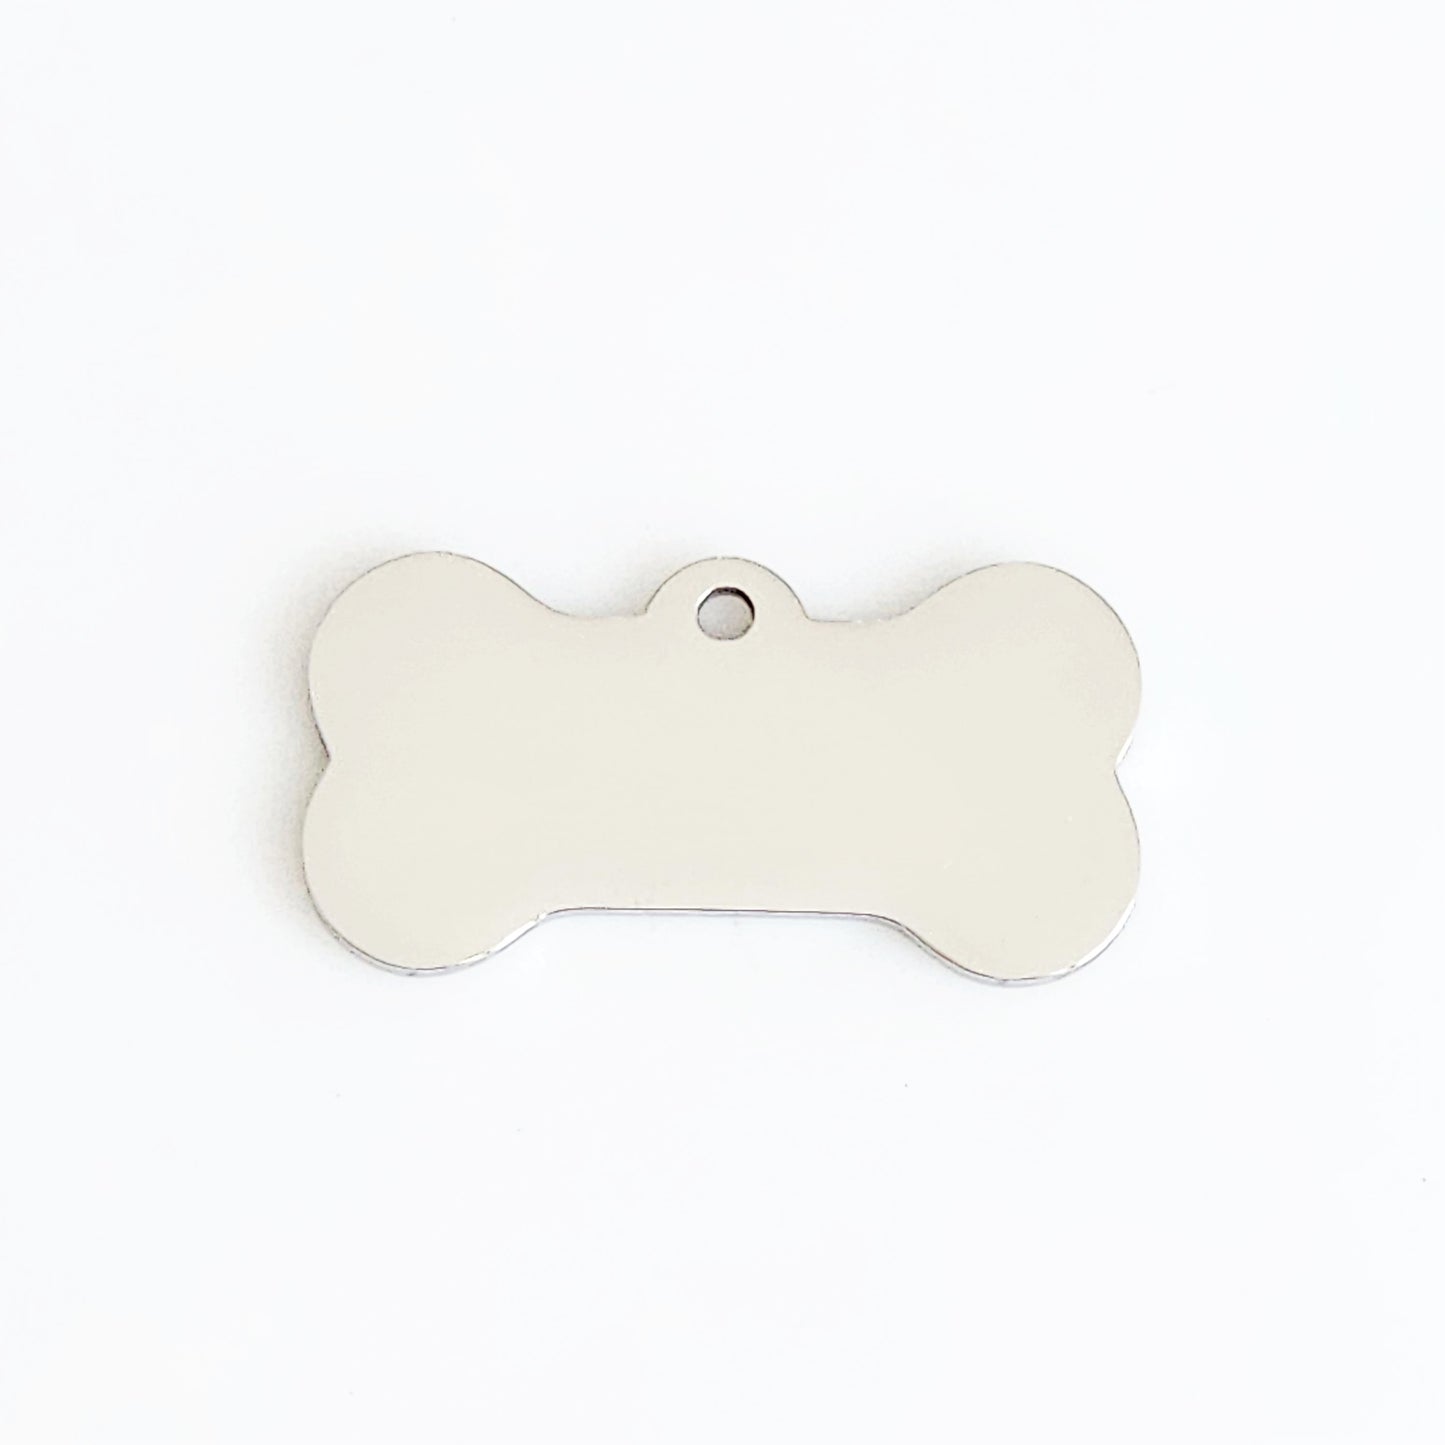 Dog Bone Charm - Stainless Steel - 16mm x 31mm